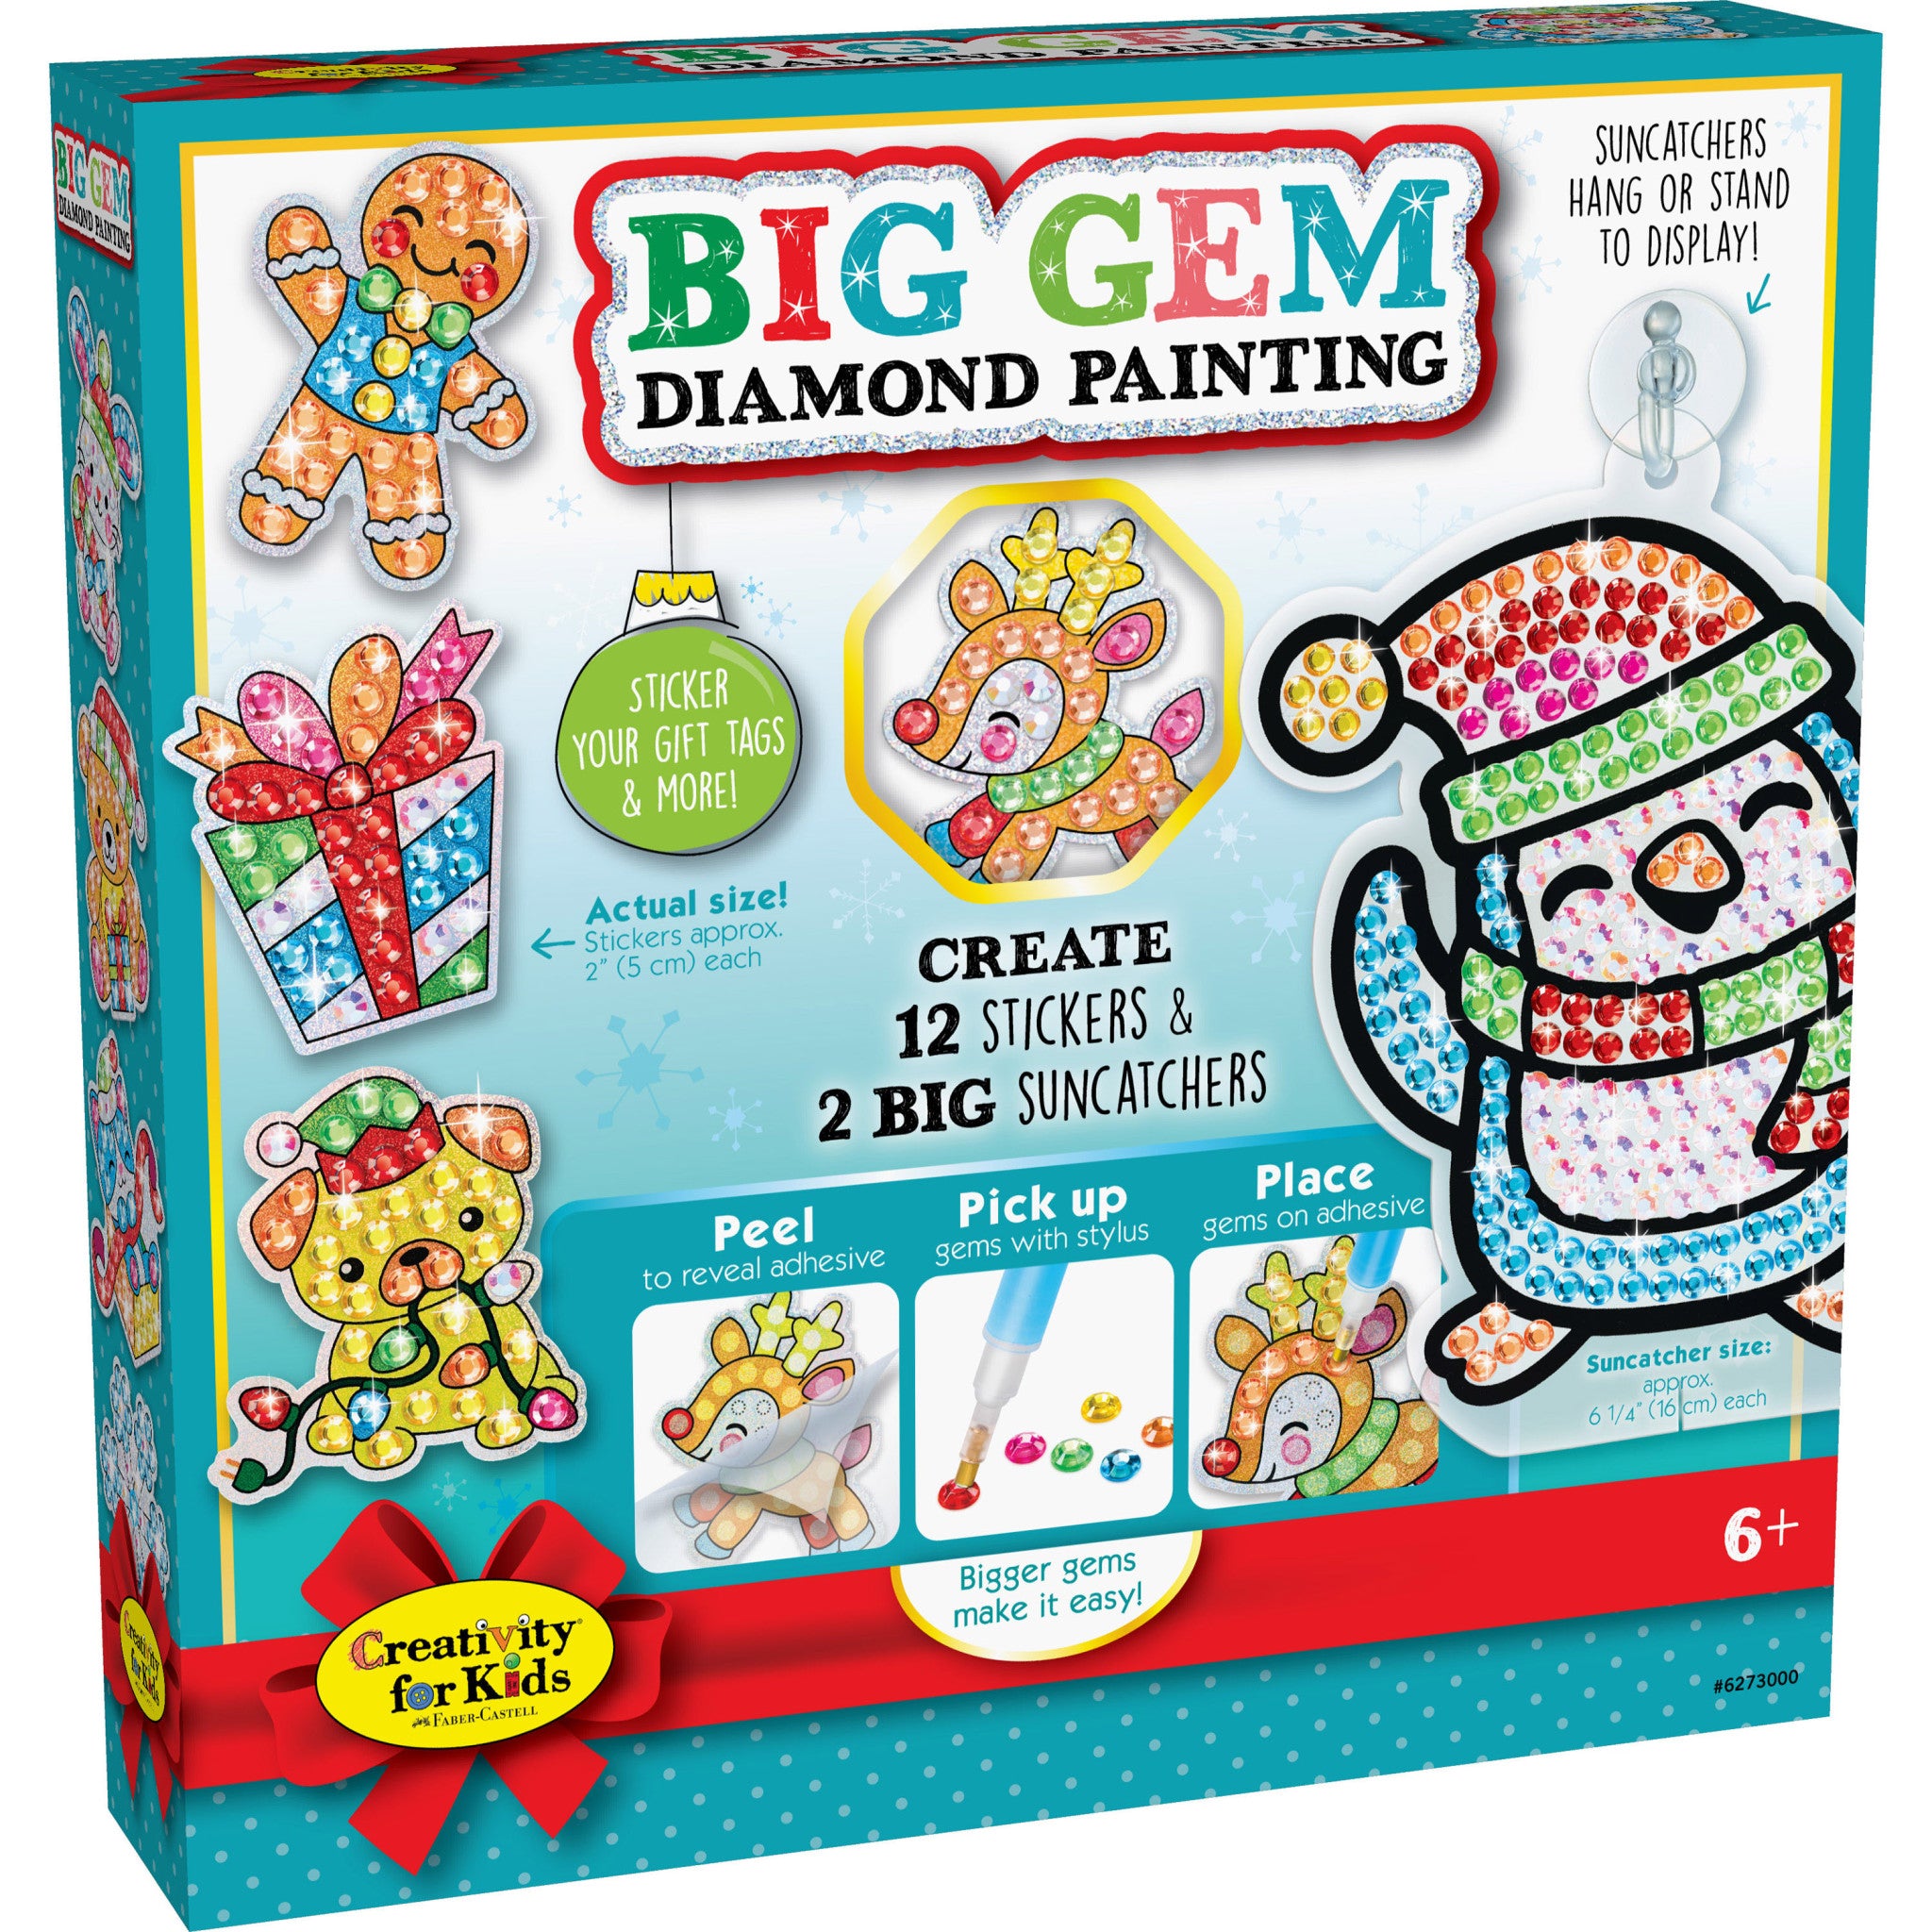 Faber-Castell creativity for kids big gem diamond painting kit